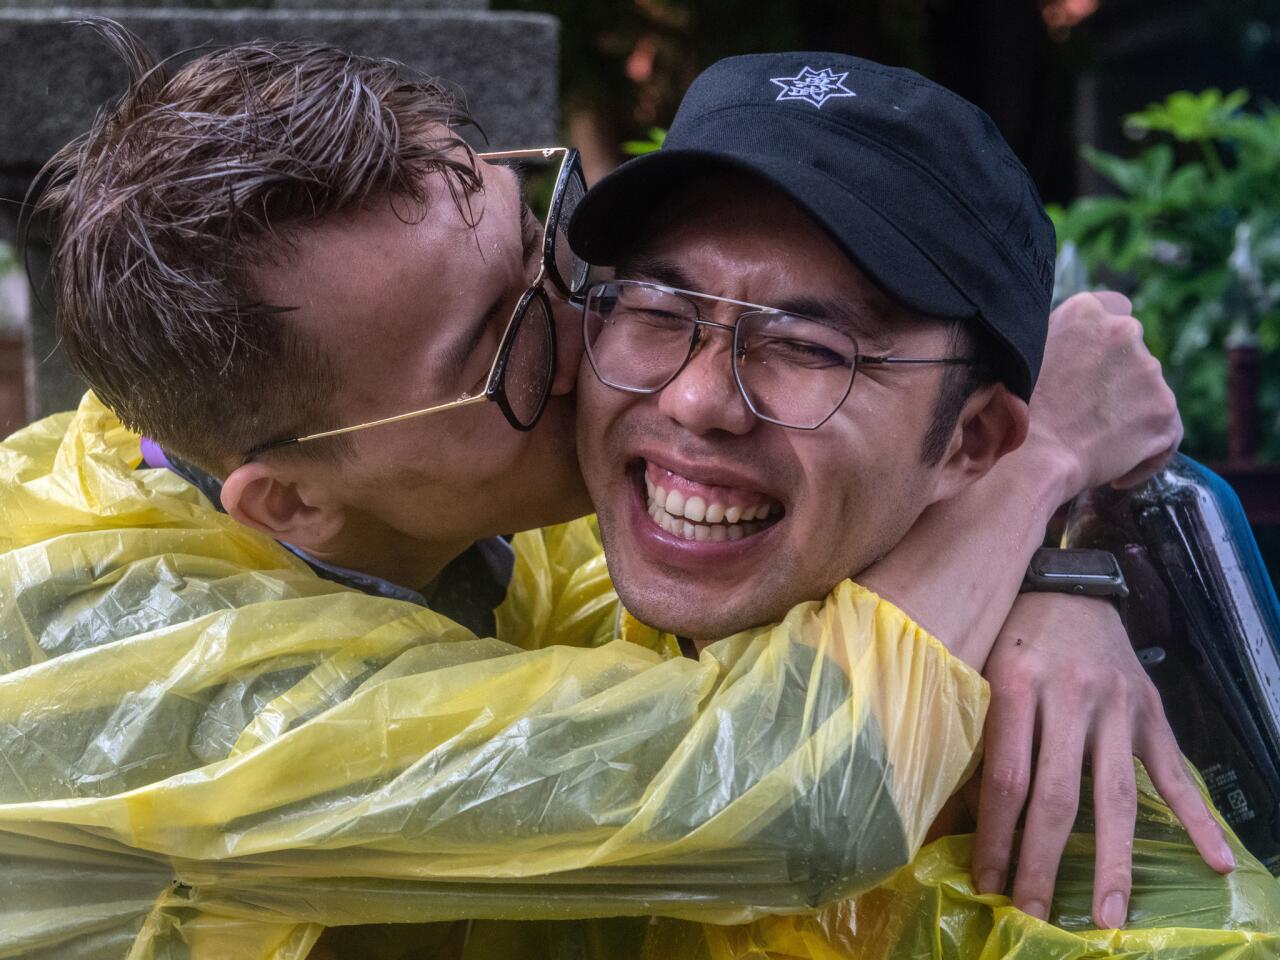 Taiwan legalizes same-sex marriage